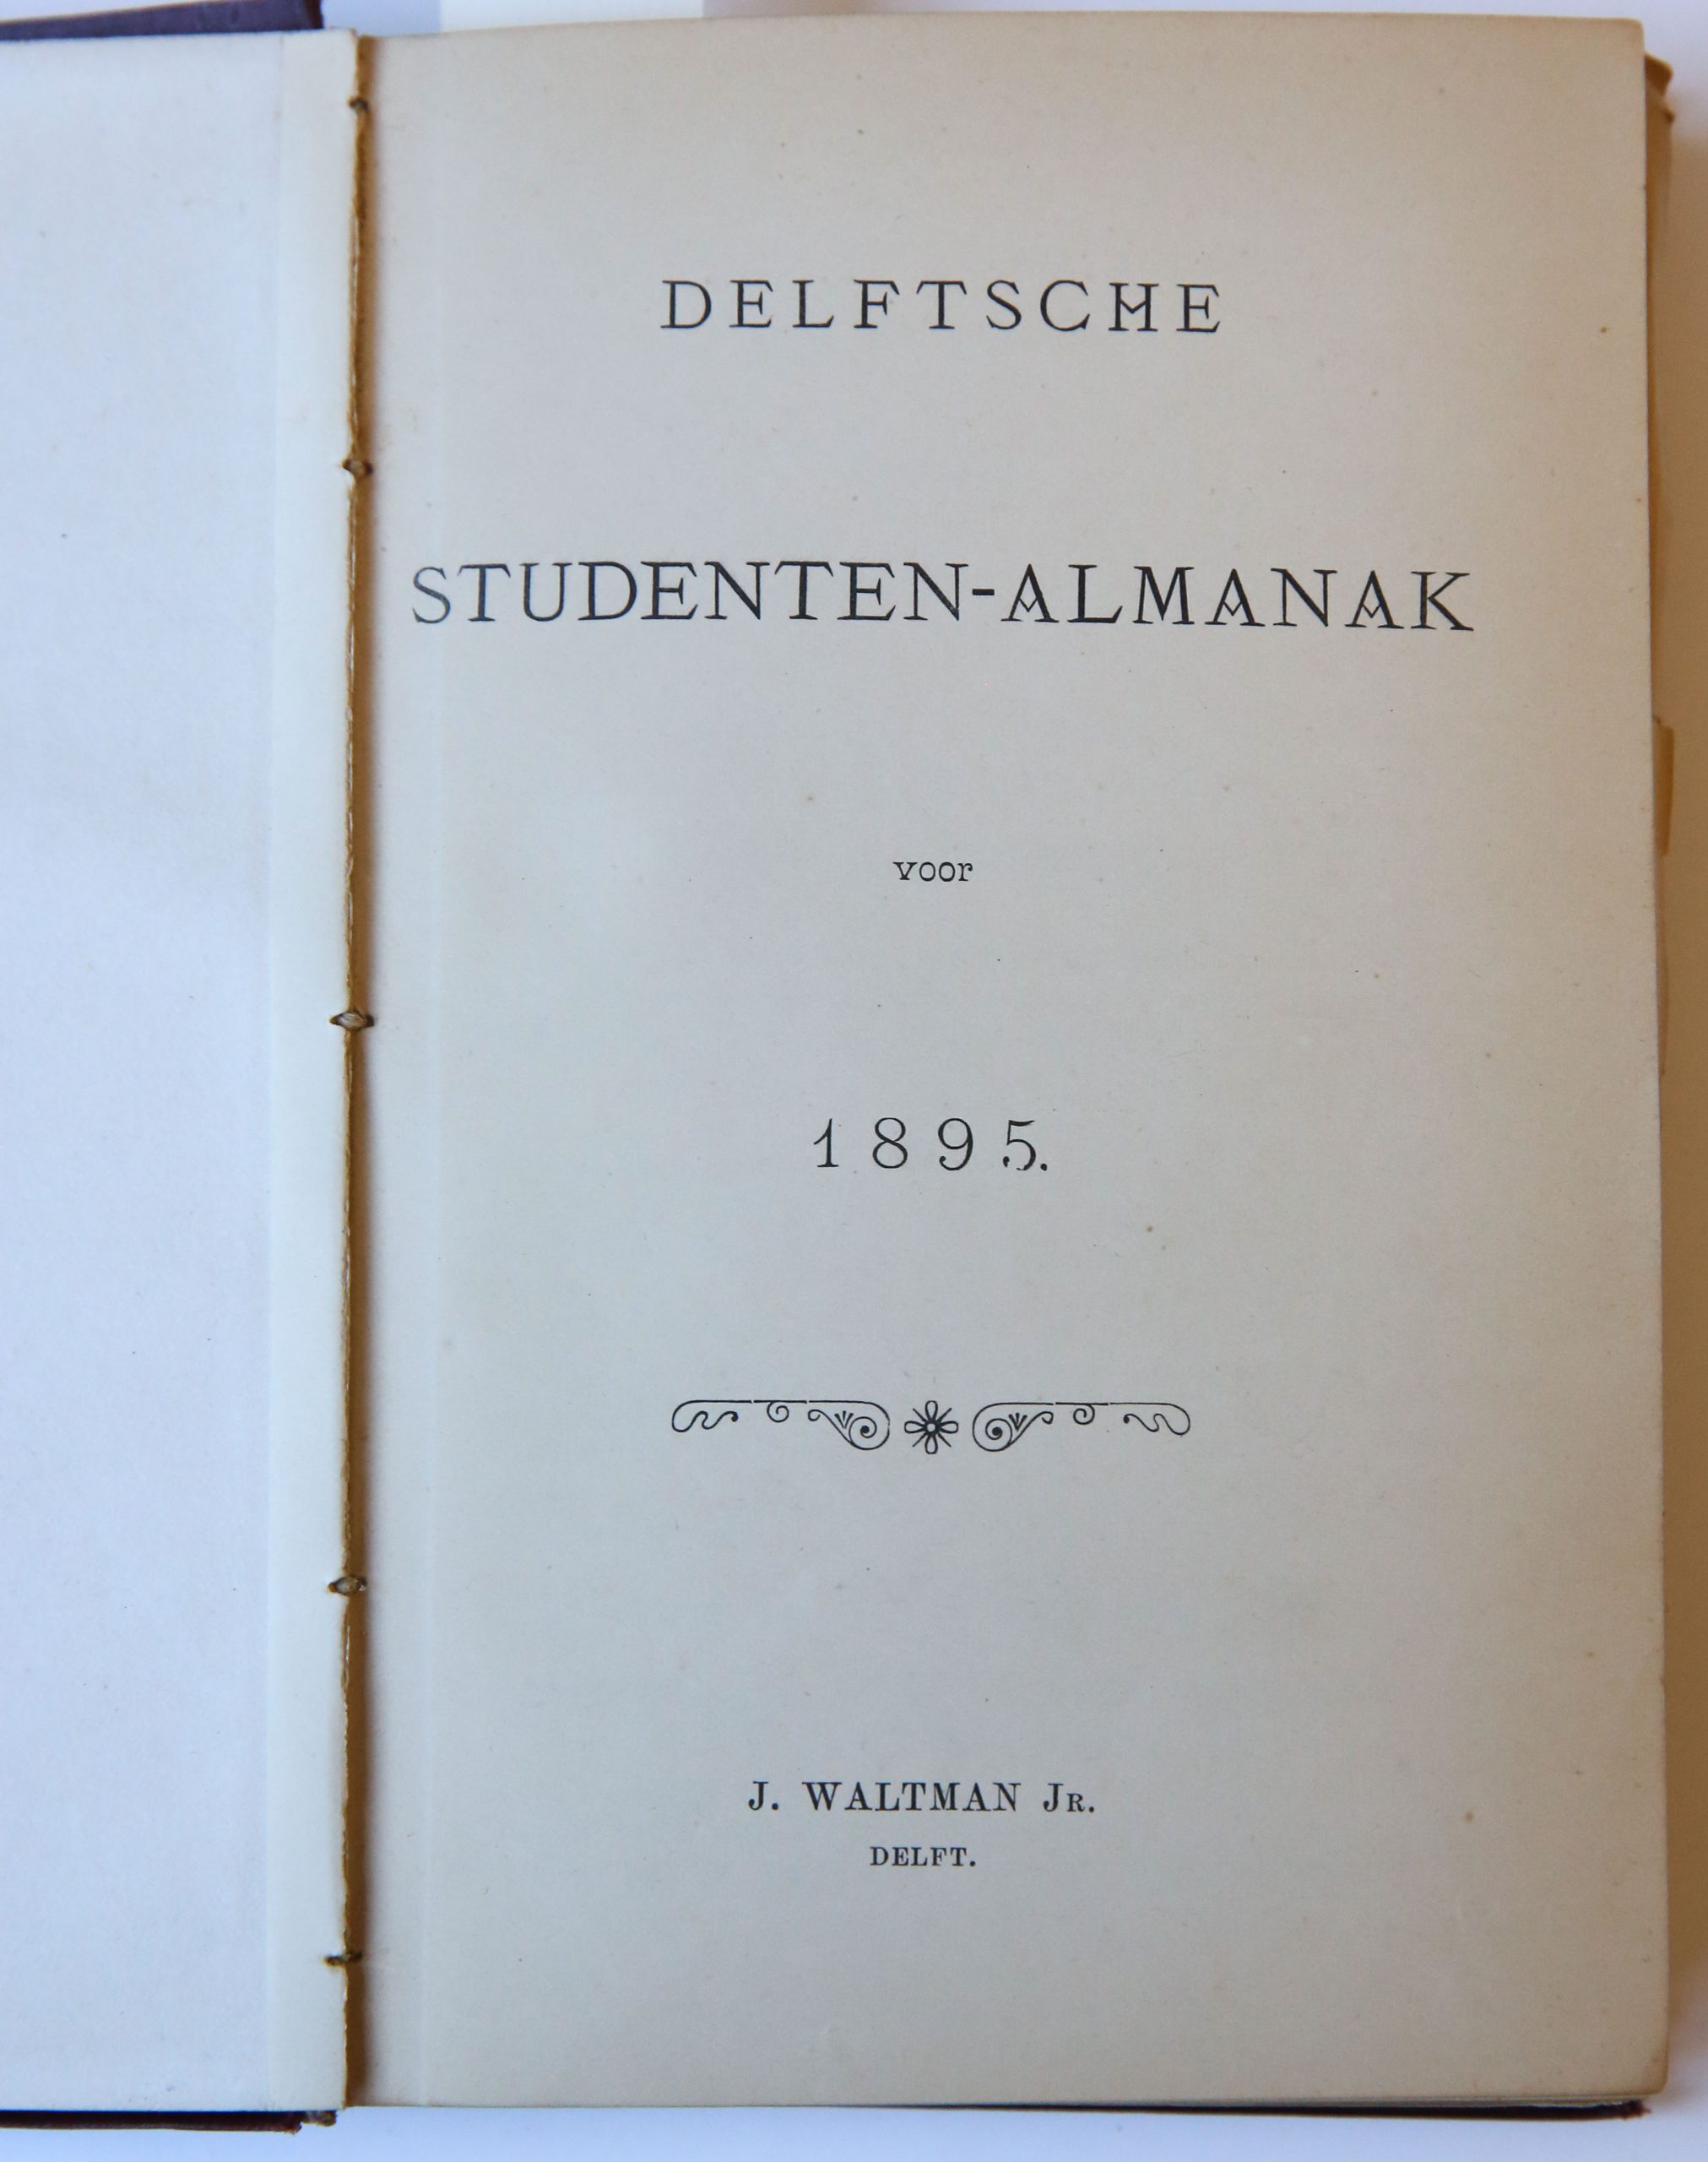 Delftsche Studenten-Almanak 1895, J. Waltman jr. Delft 1895, 354 pp.